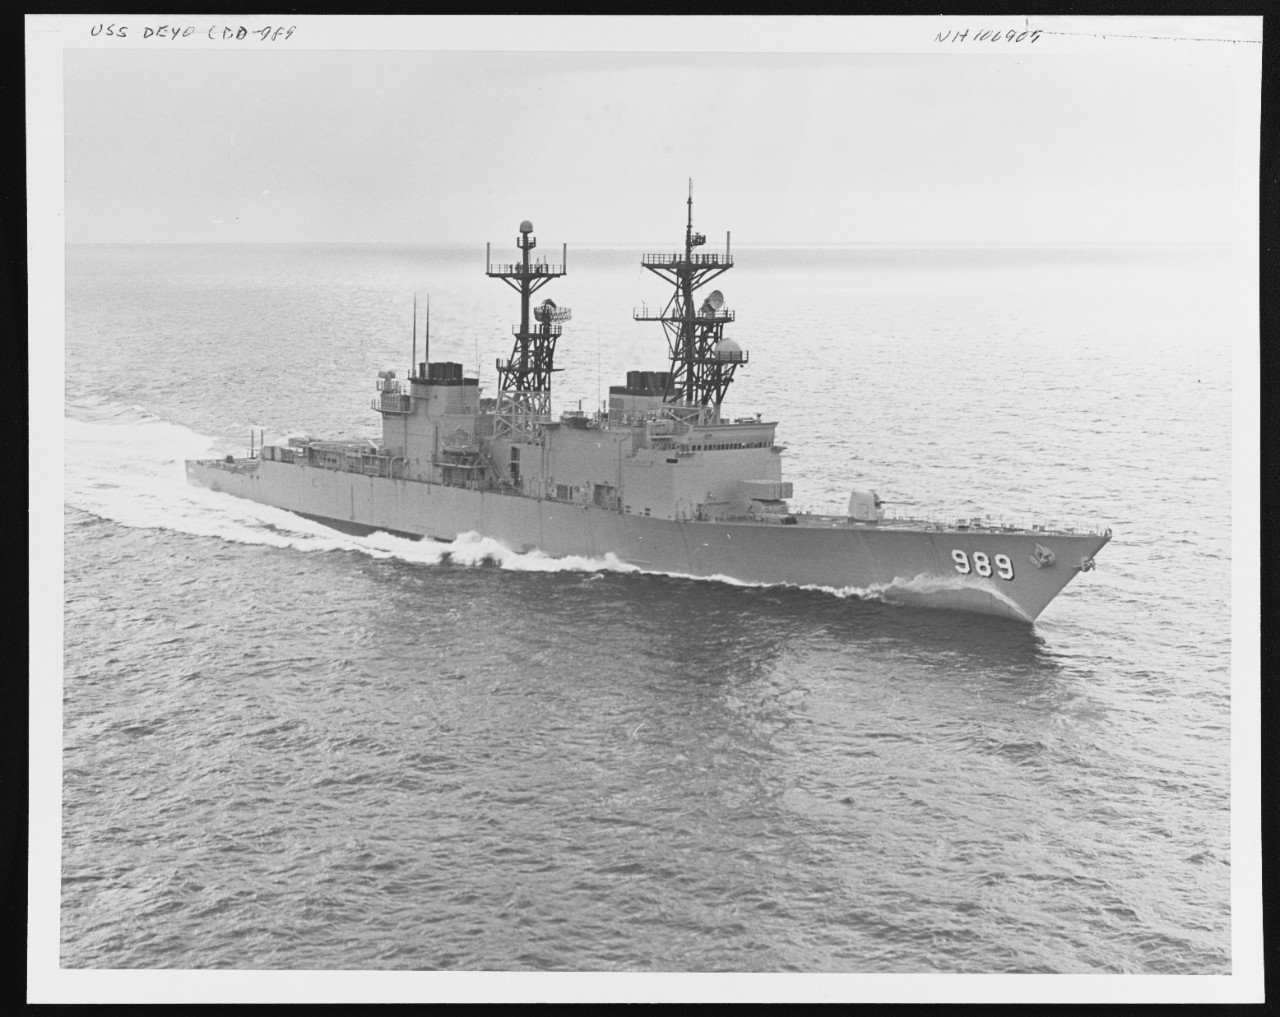 Photo # NH 106907  USS Deyo